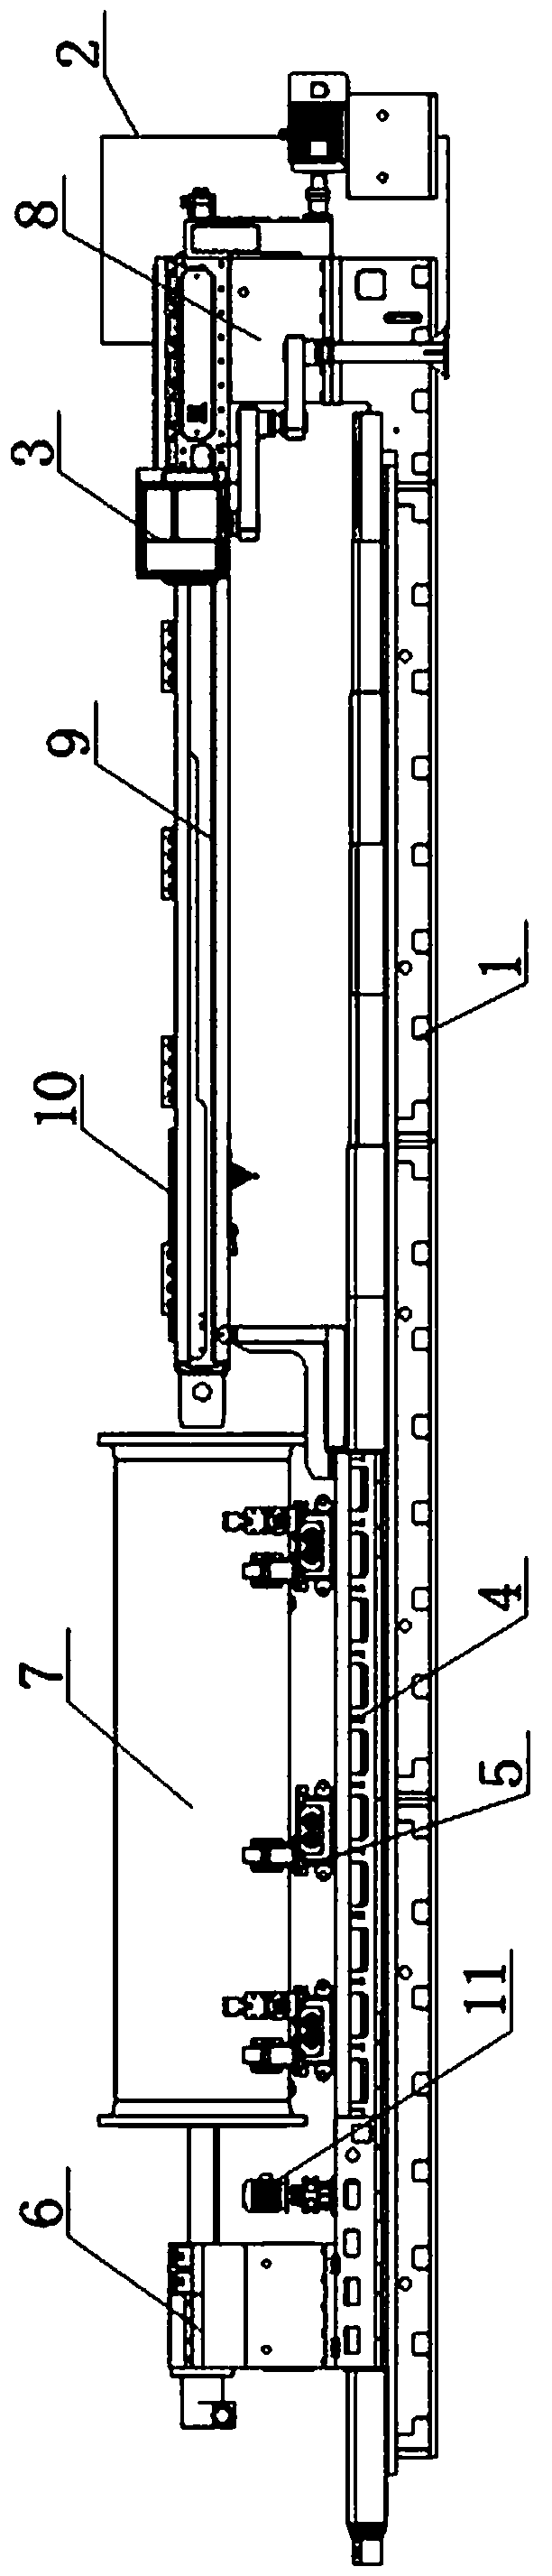 Numerical control deep hole keyway milling machine